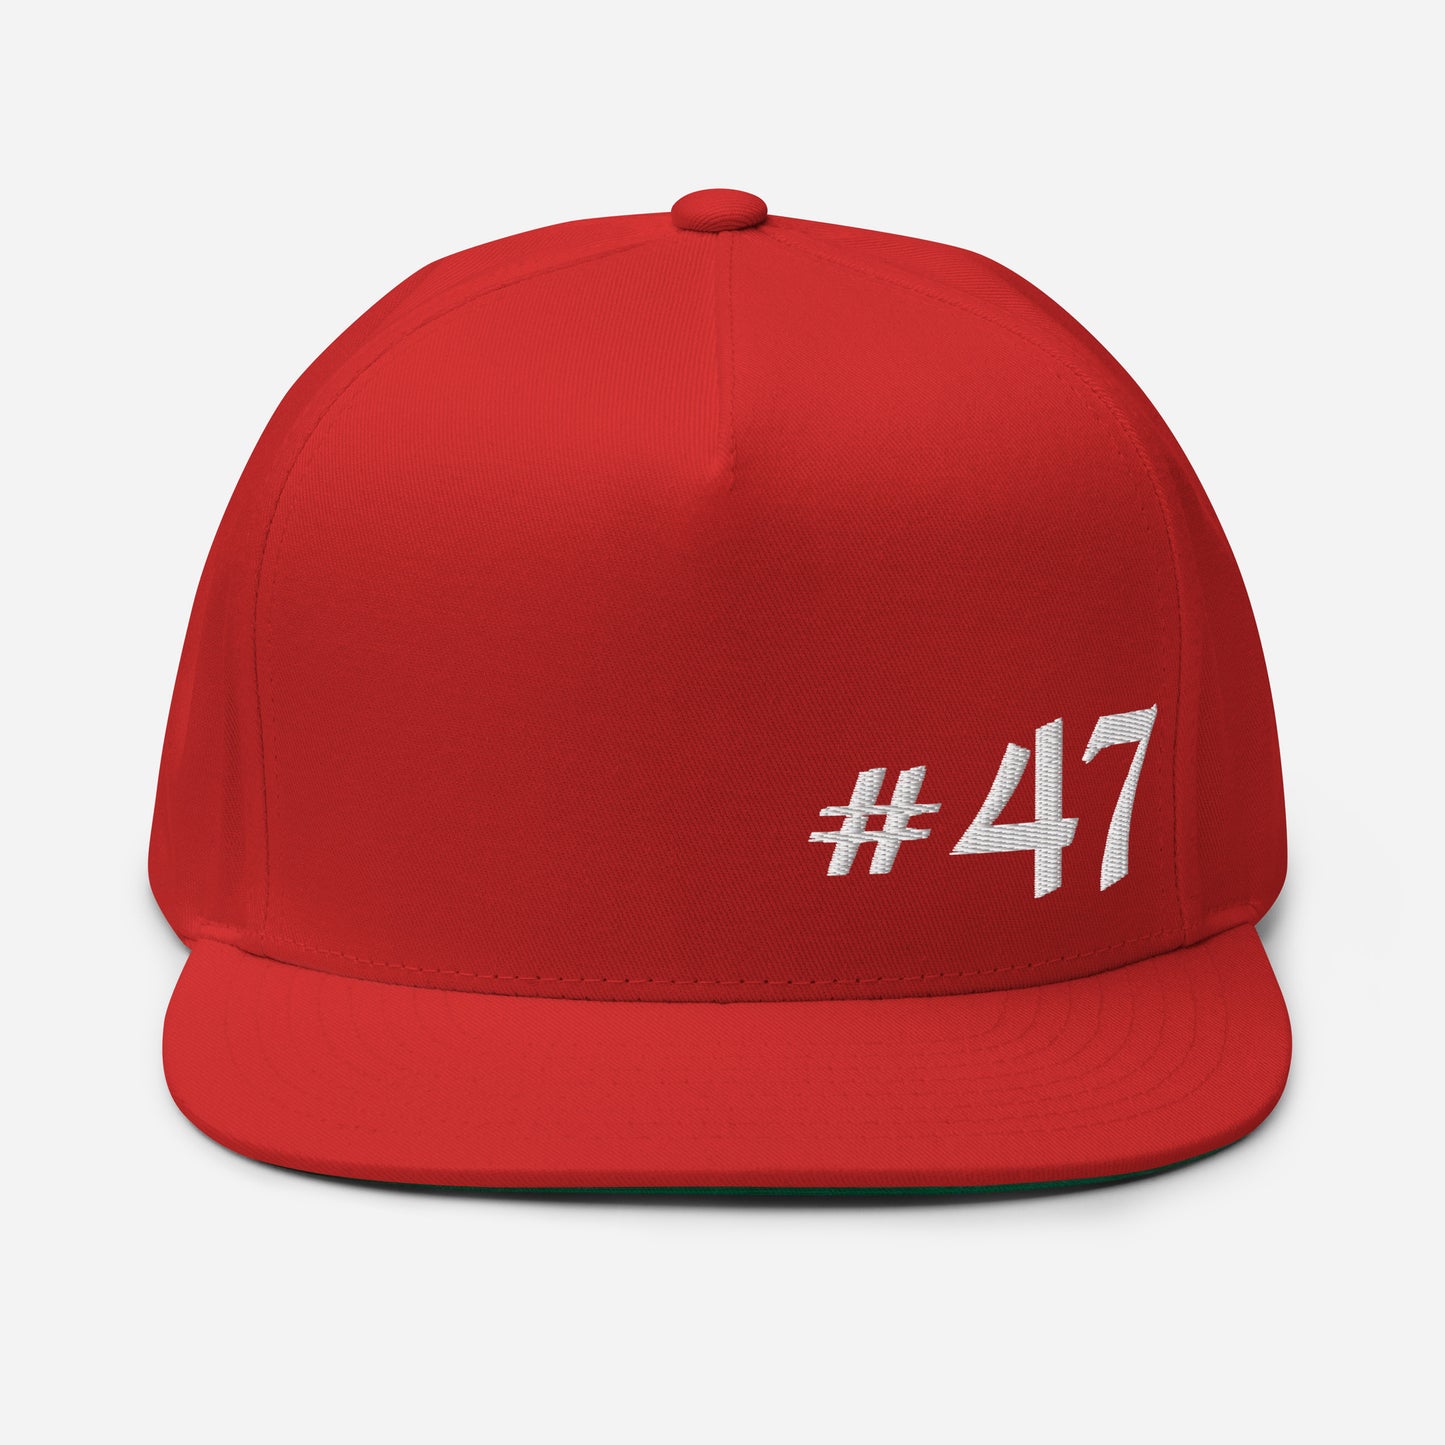 #47 Snapback "Style A" Flat Bill Cap